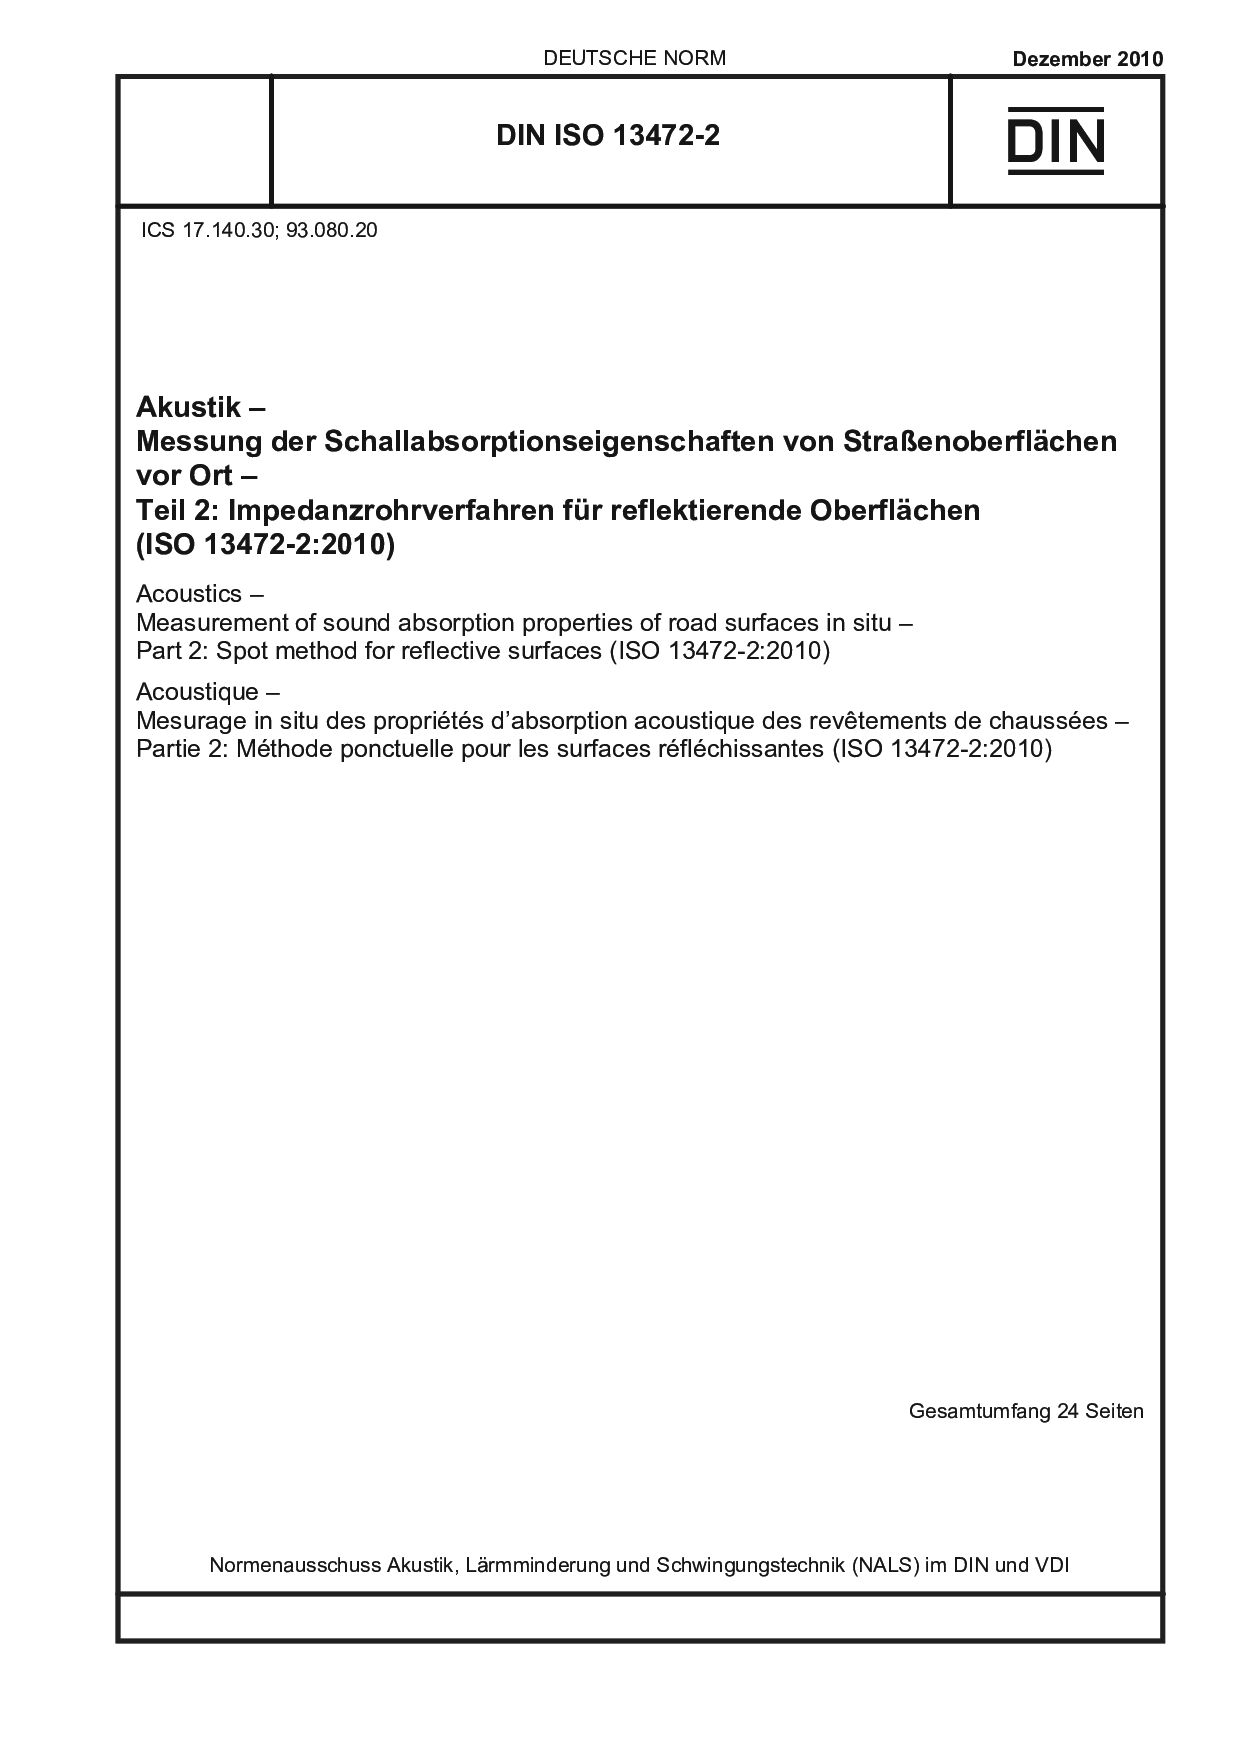 DIN ISO 13472-2:2010-12